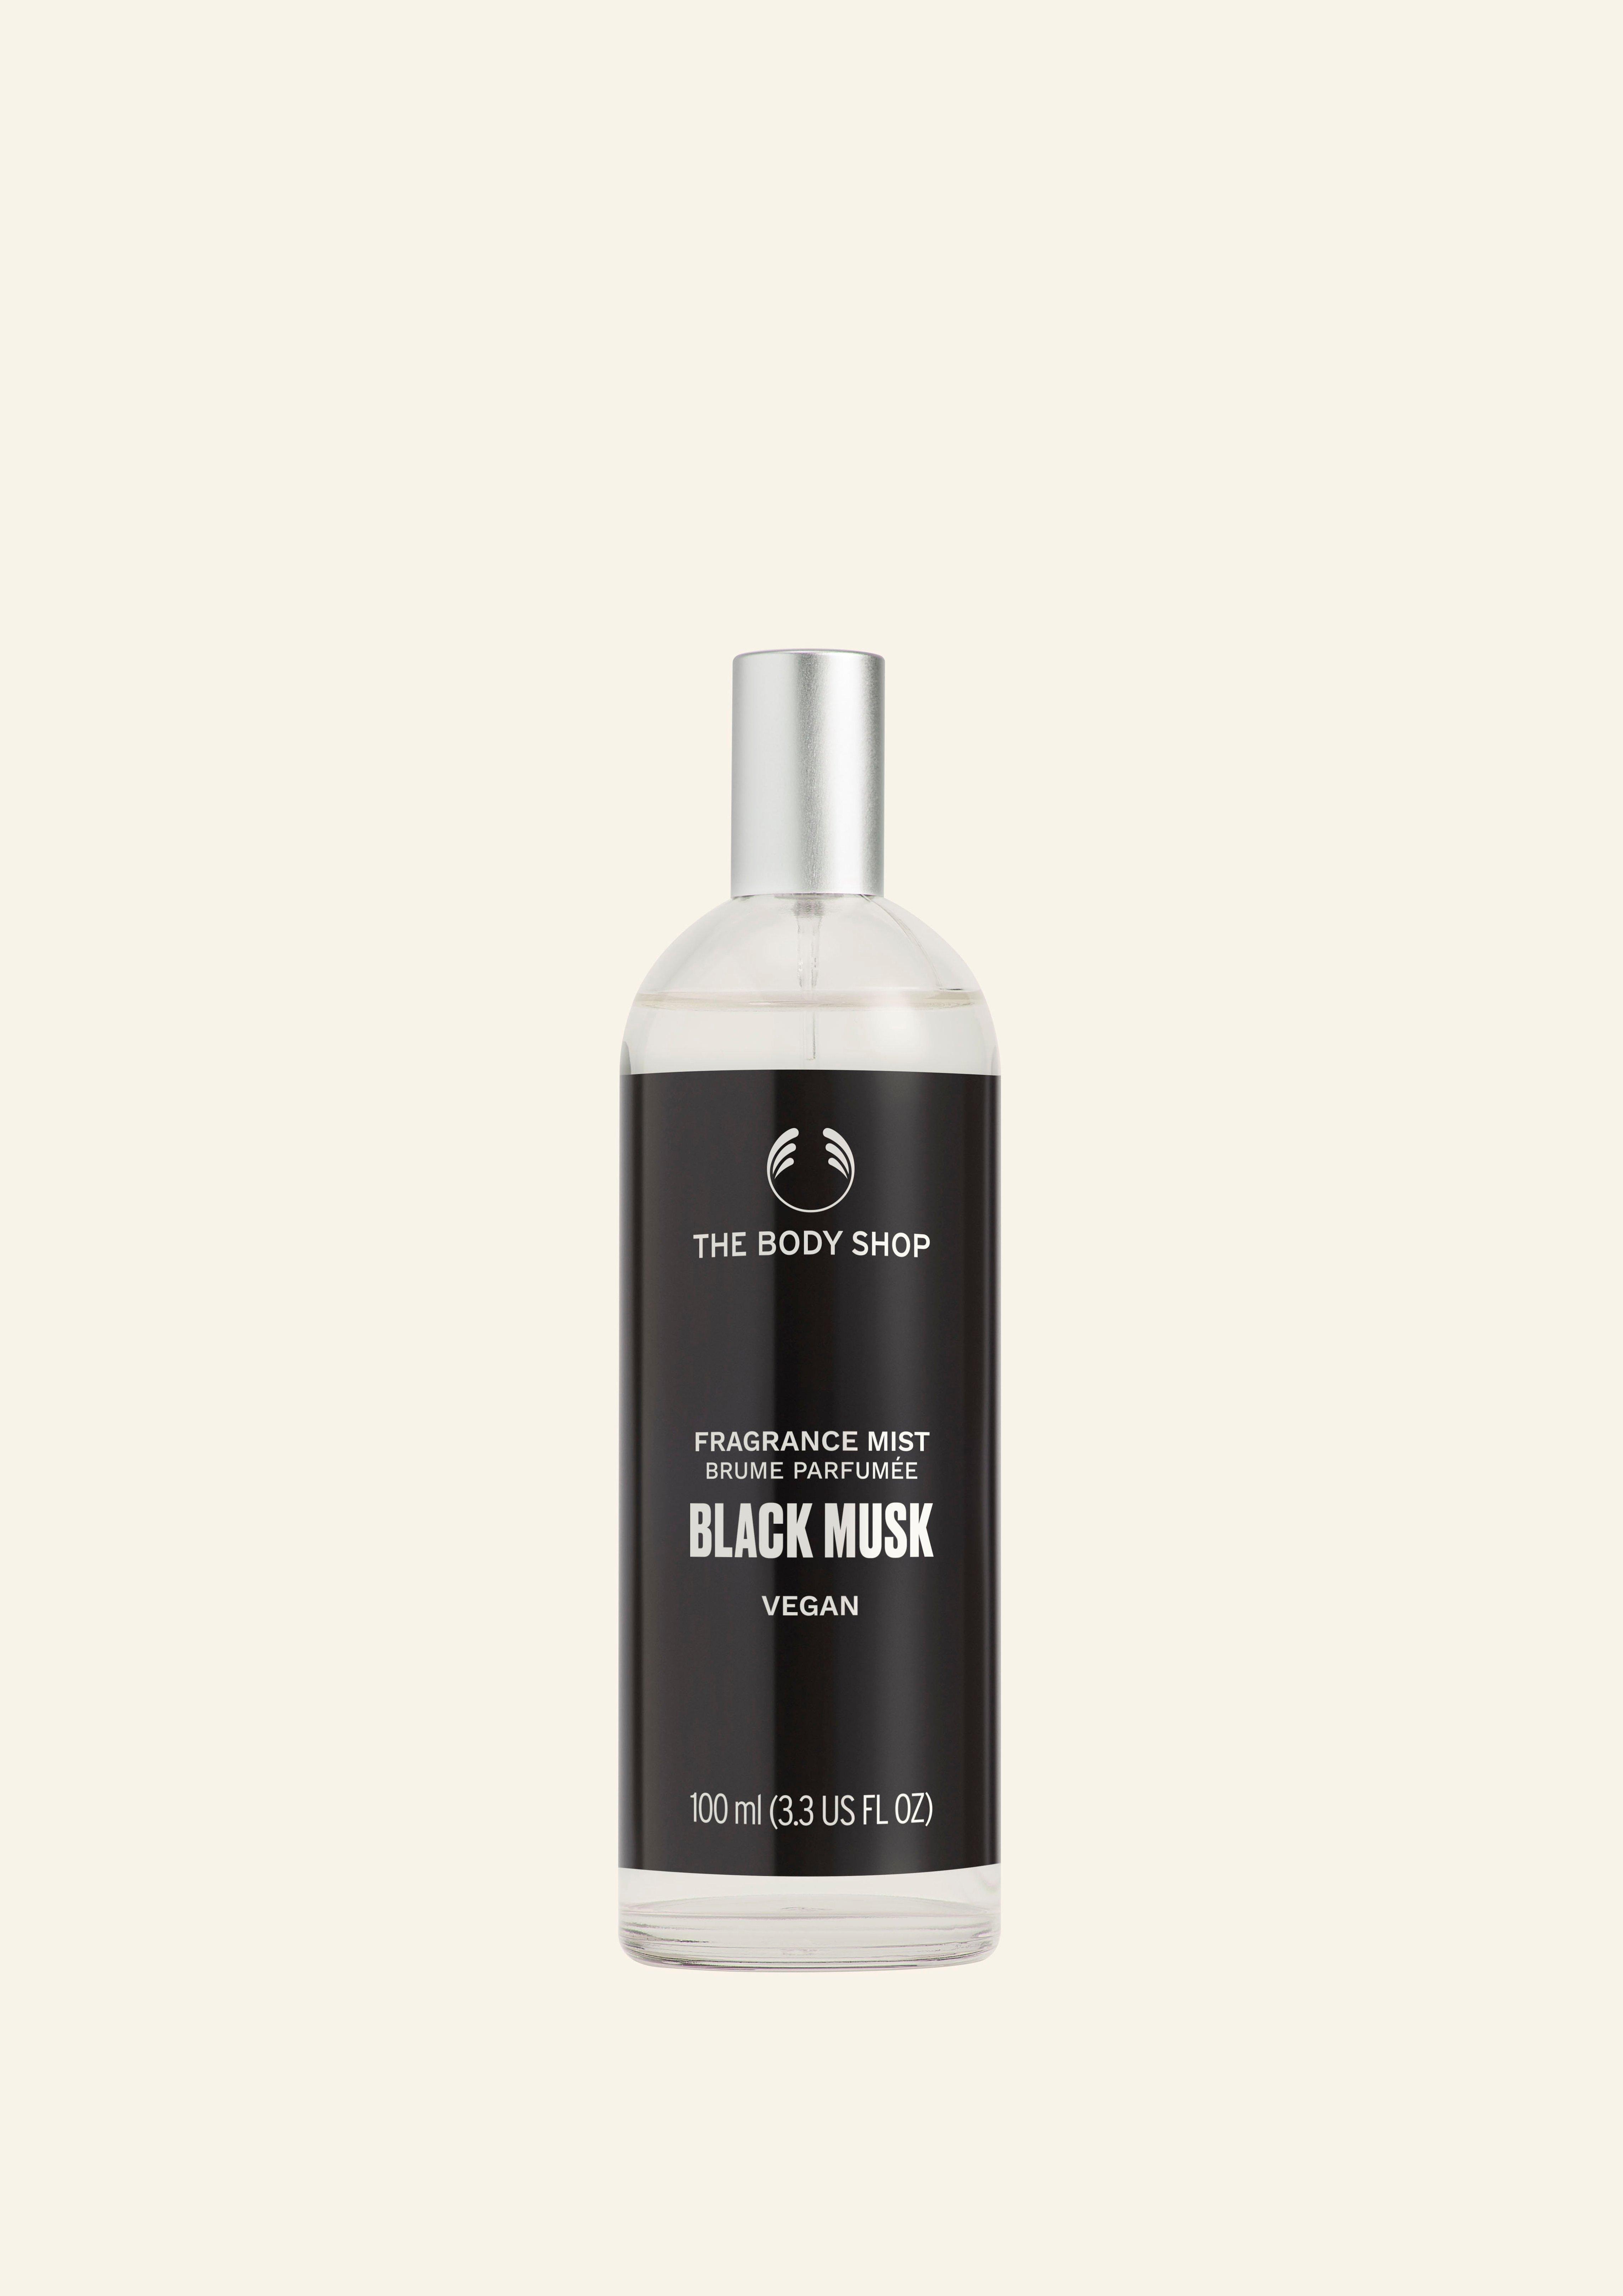 BLACK MUSK – Creating Perfume